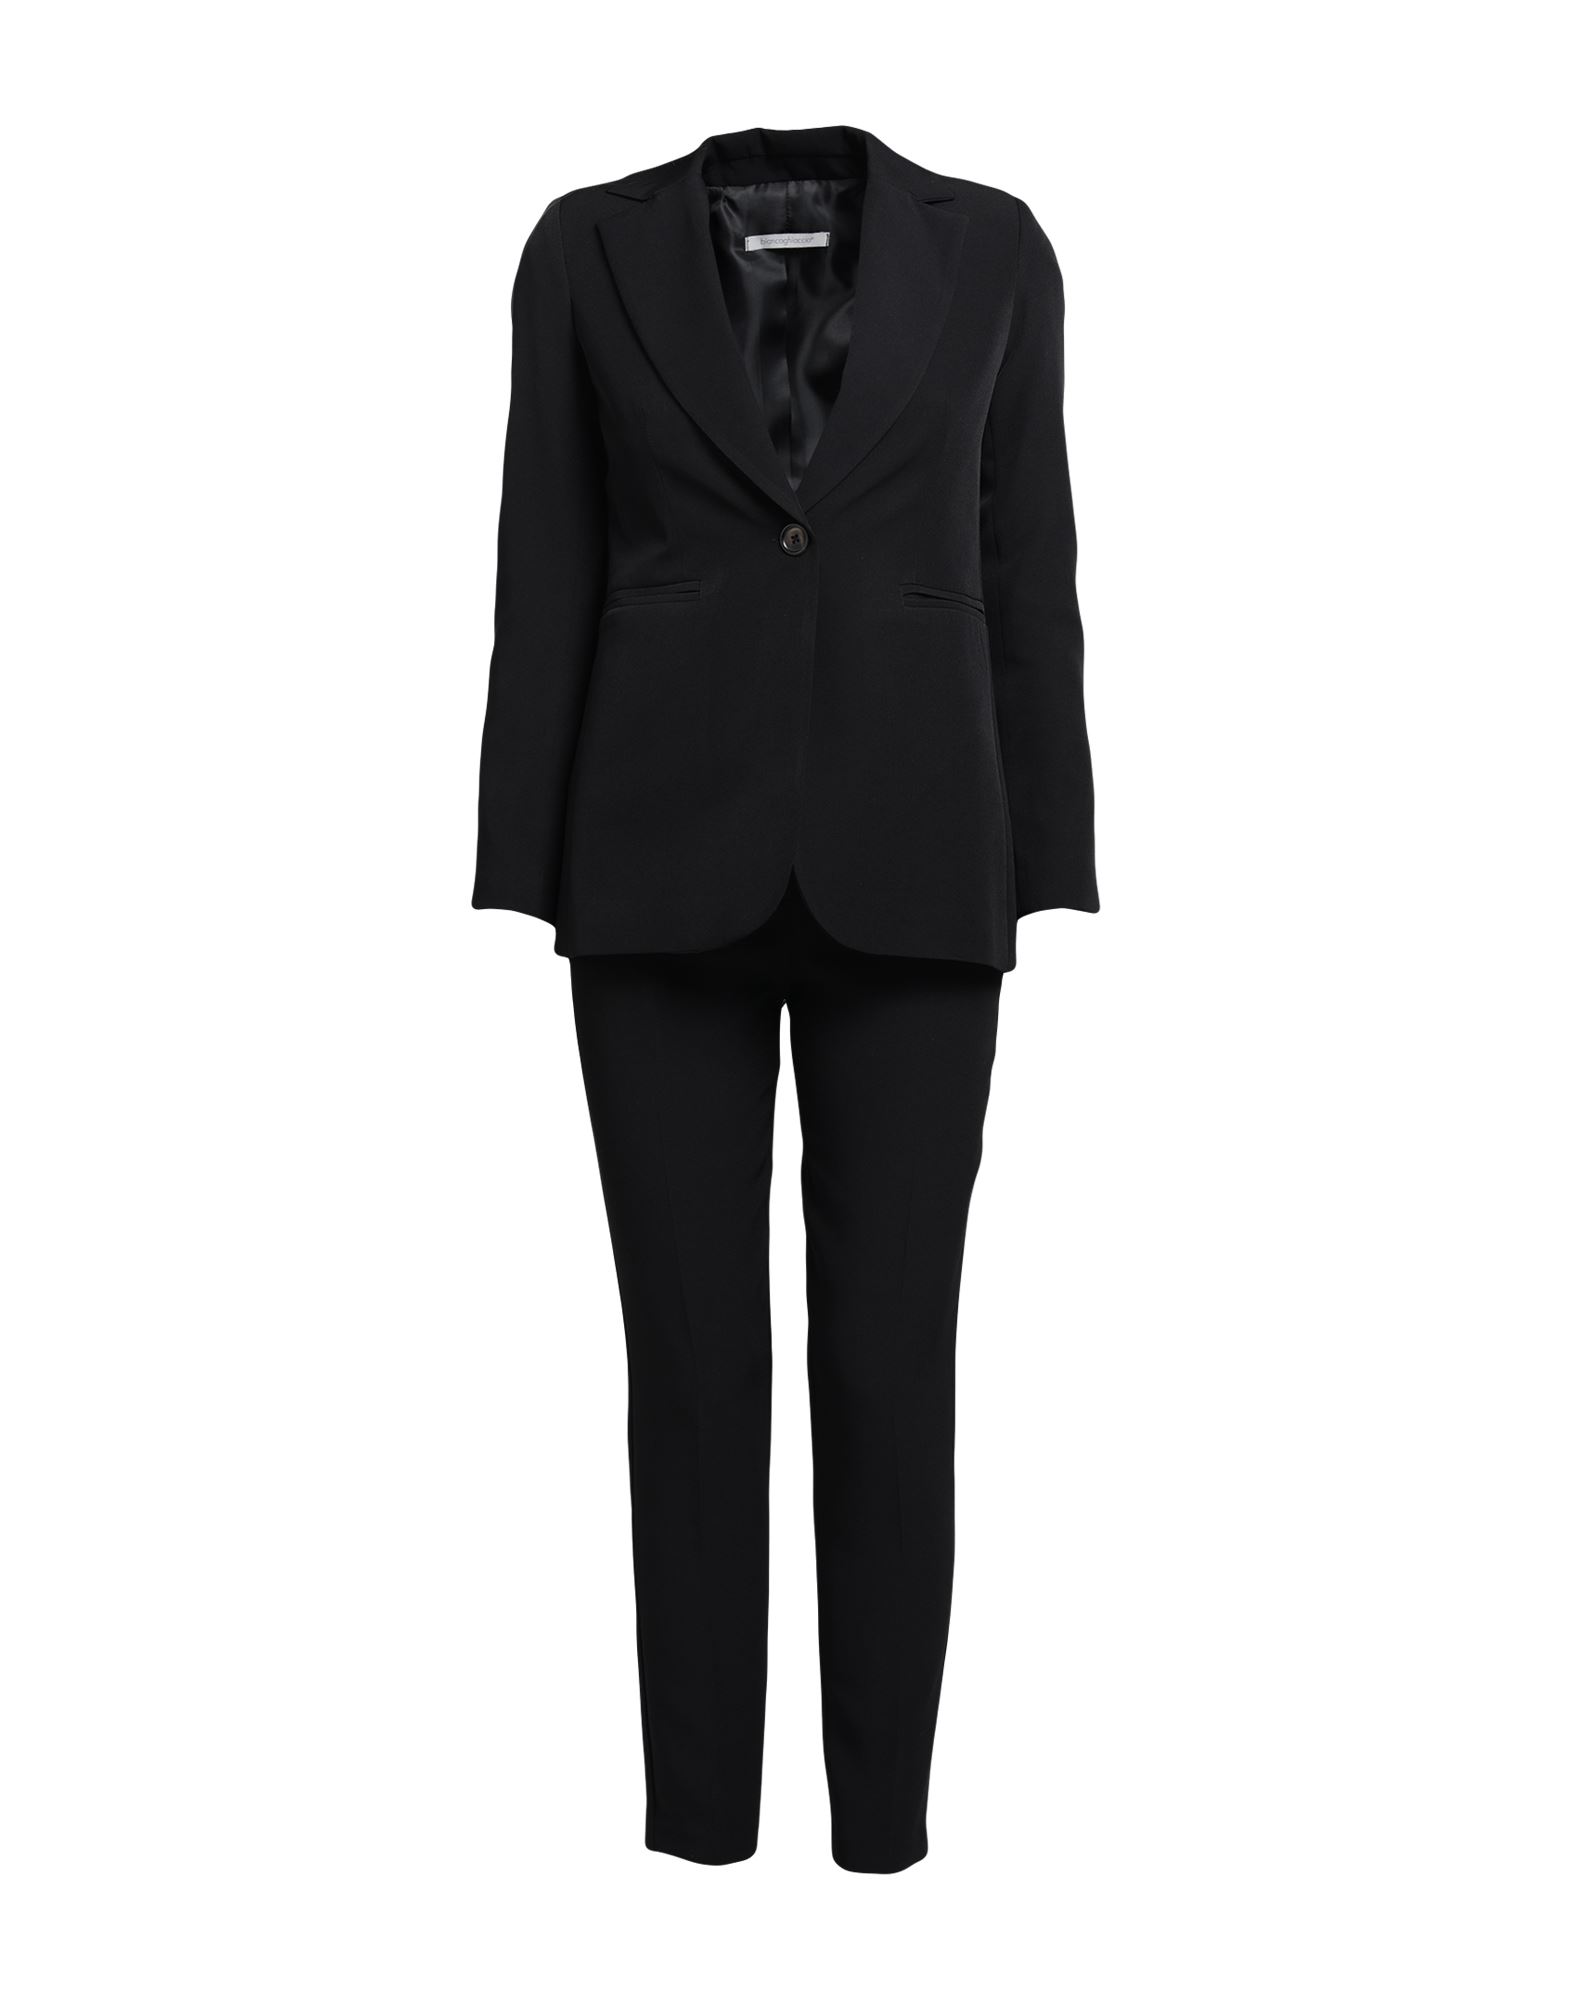 Biancoghiaccio Suits In Black